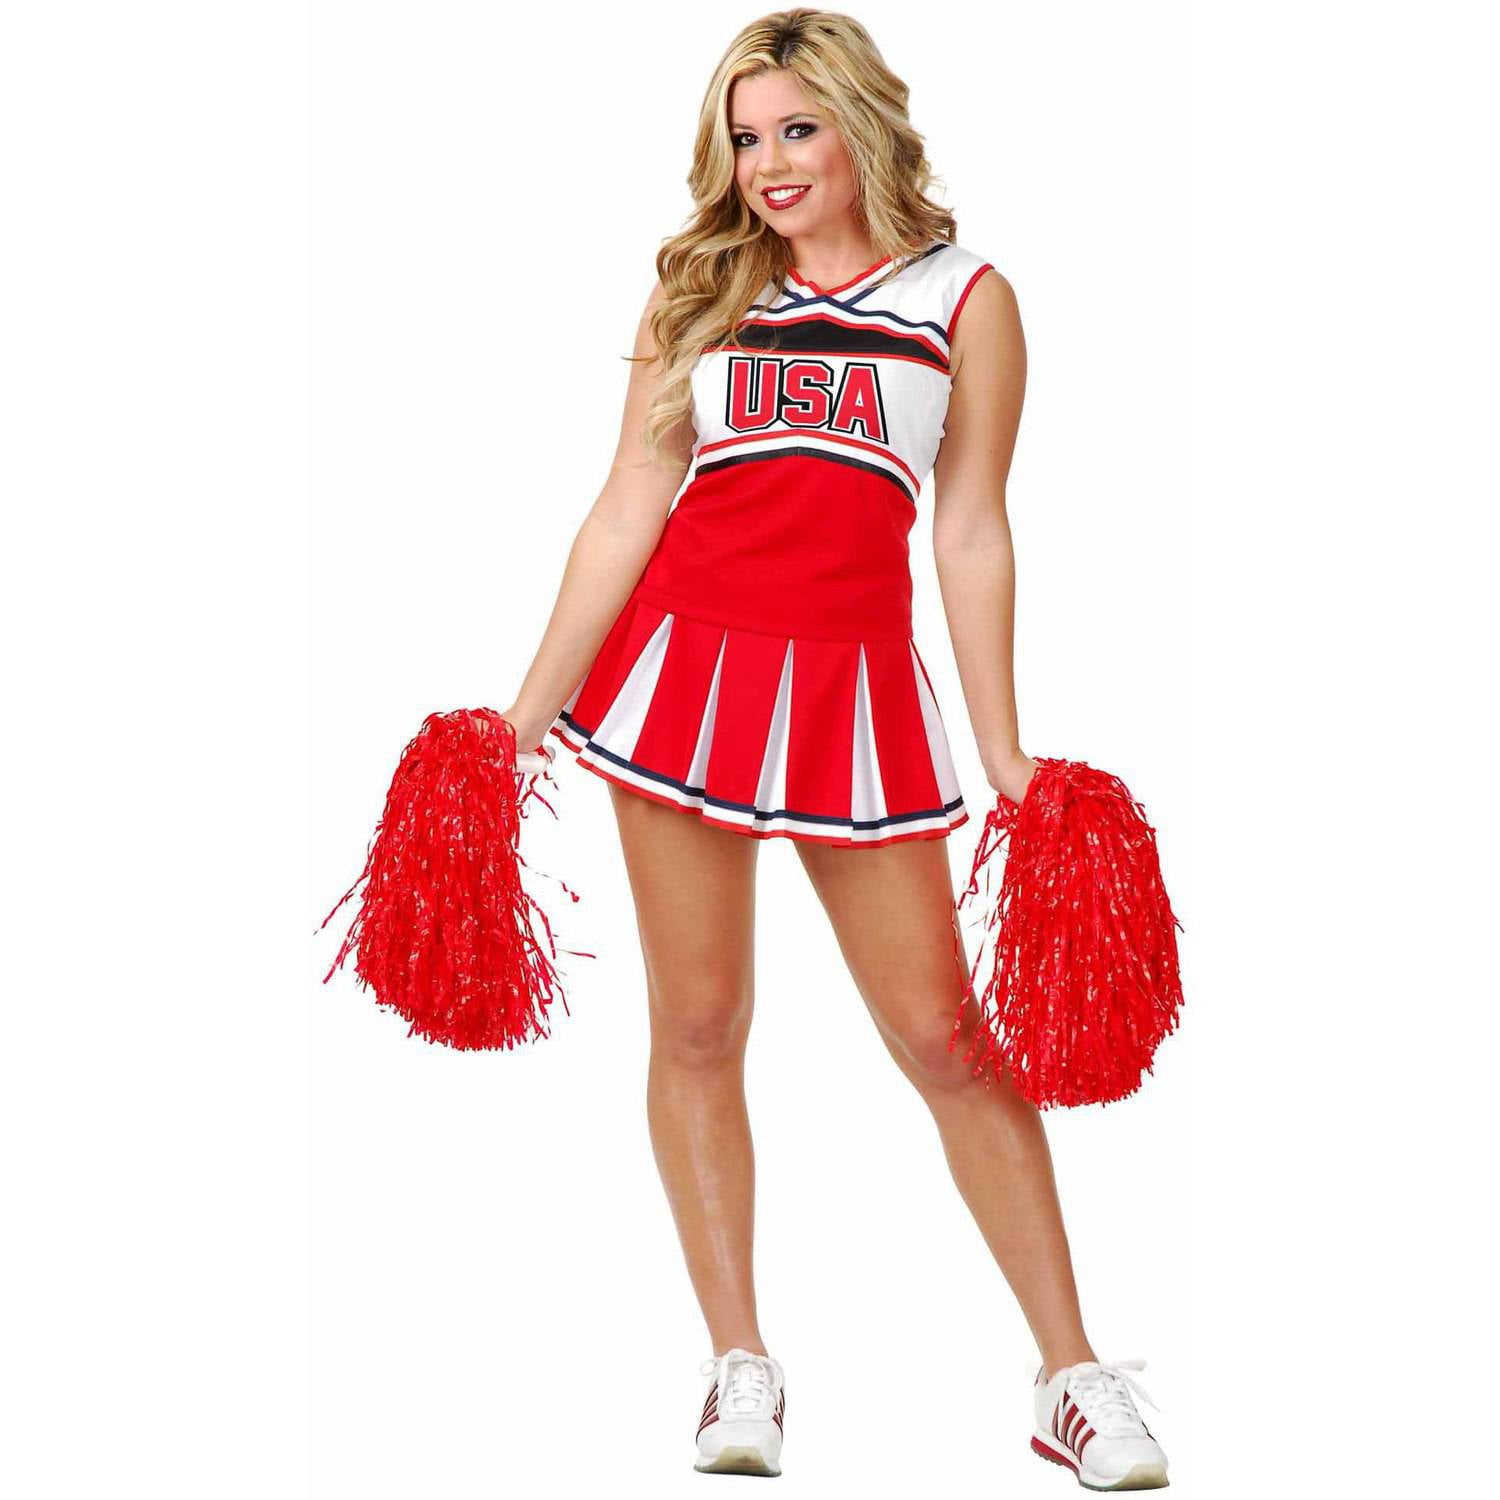 Cheerleader USA Women's Adult Halloween Costume - Walmart.com